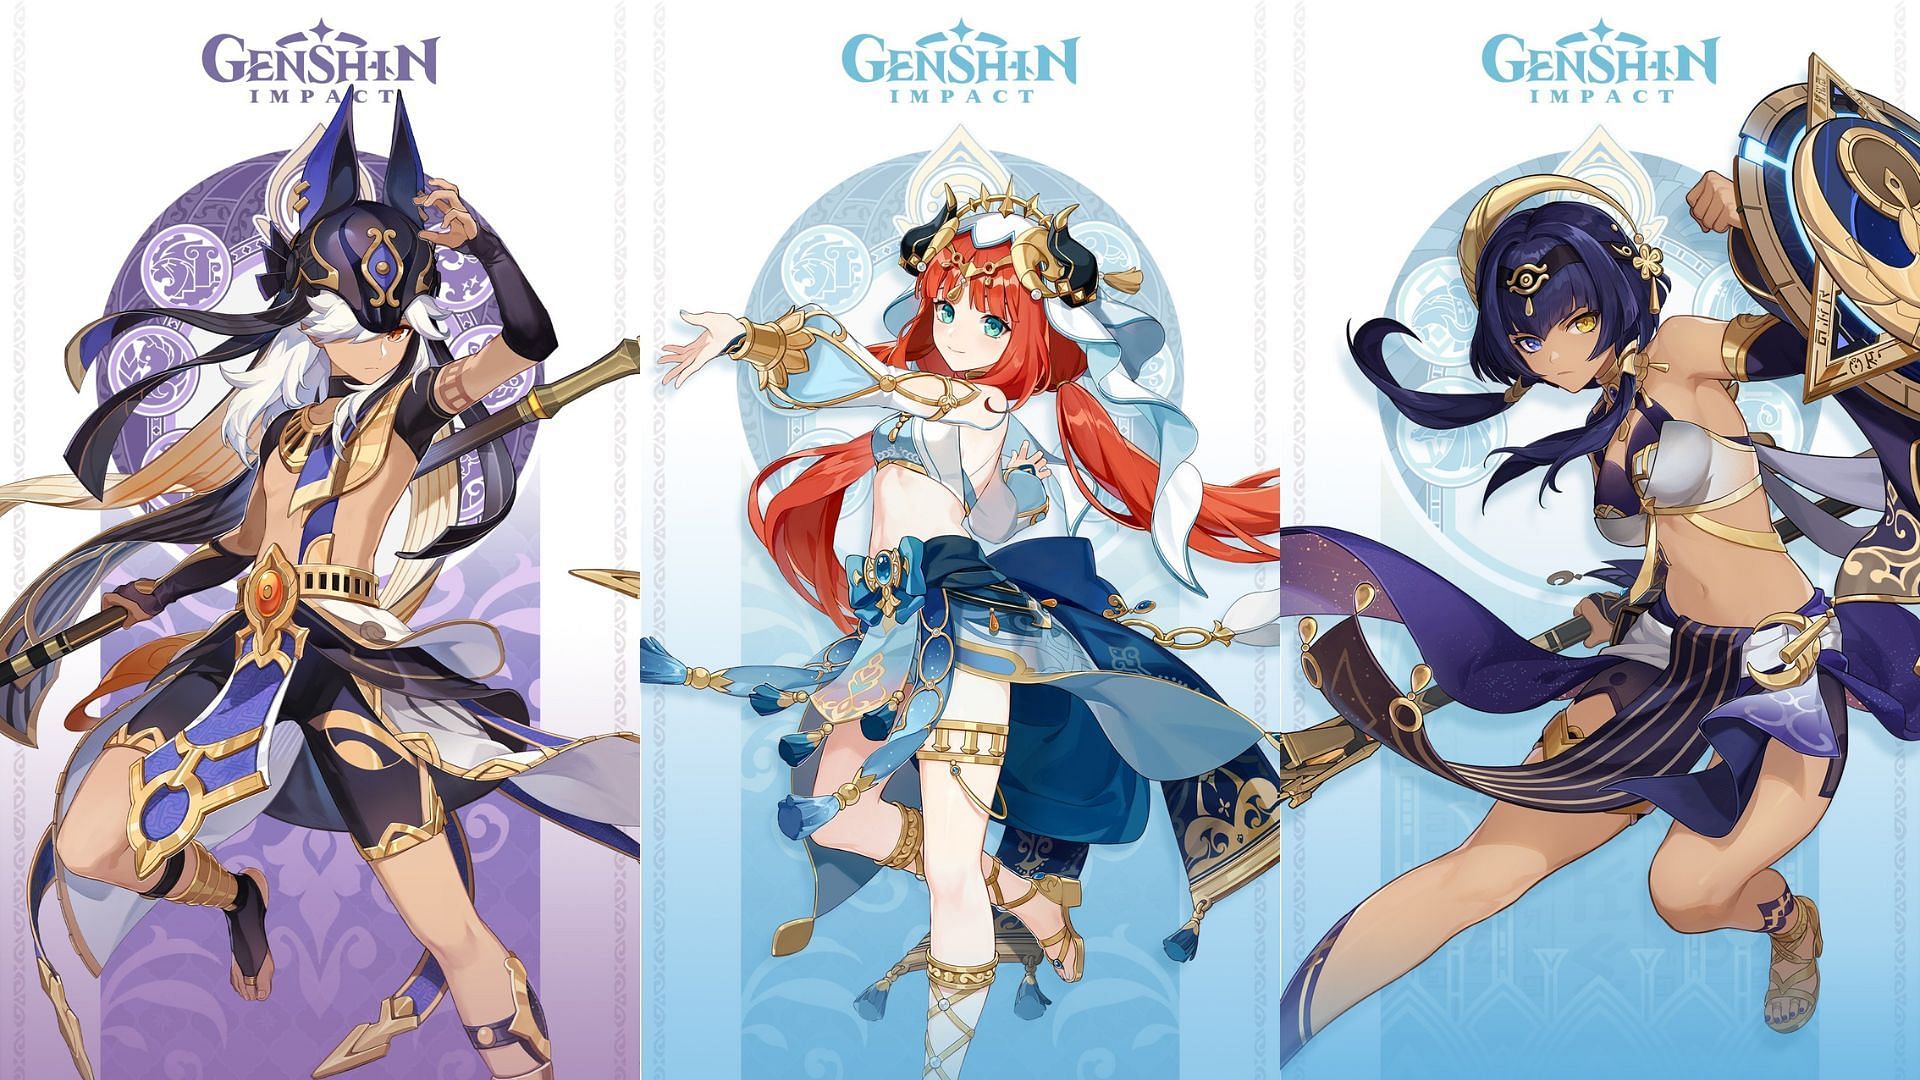 New drip marketing reveals 3.1 banner characters (Image via Genshin Impact)